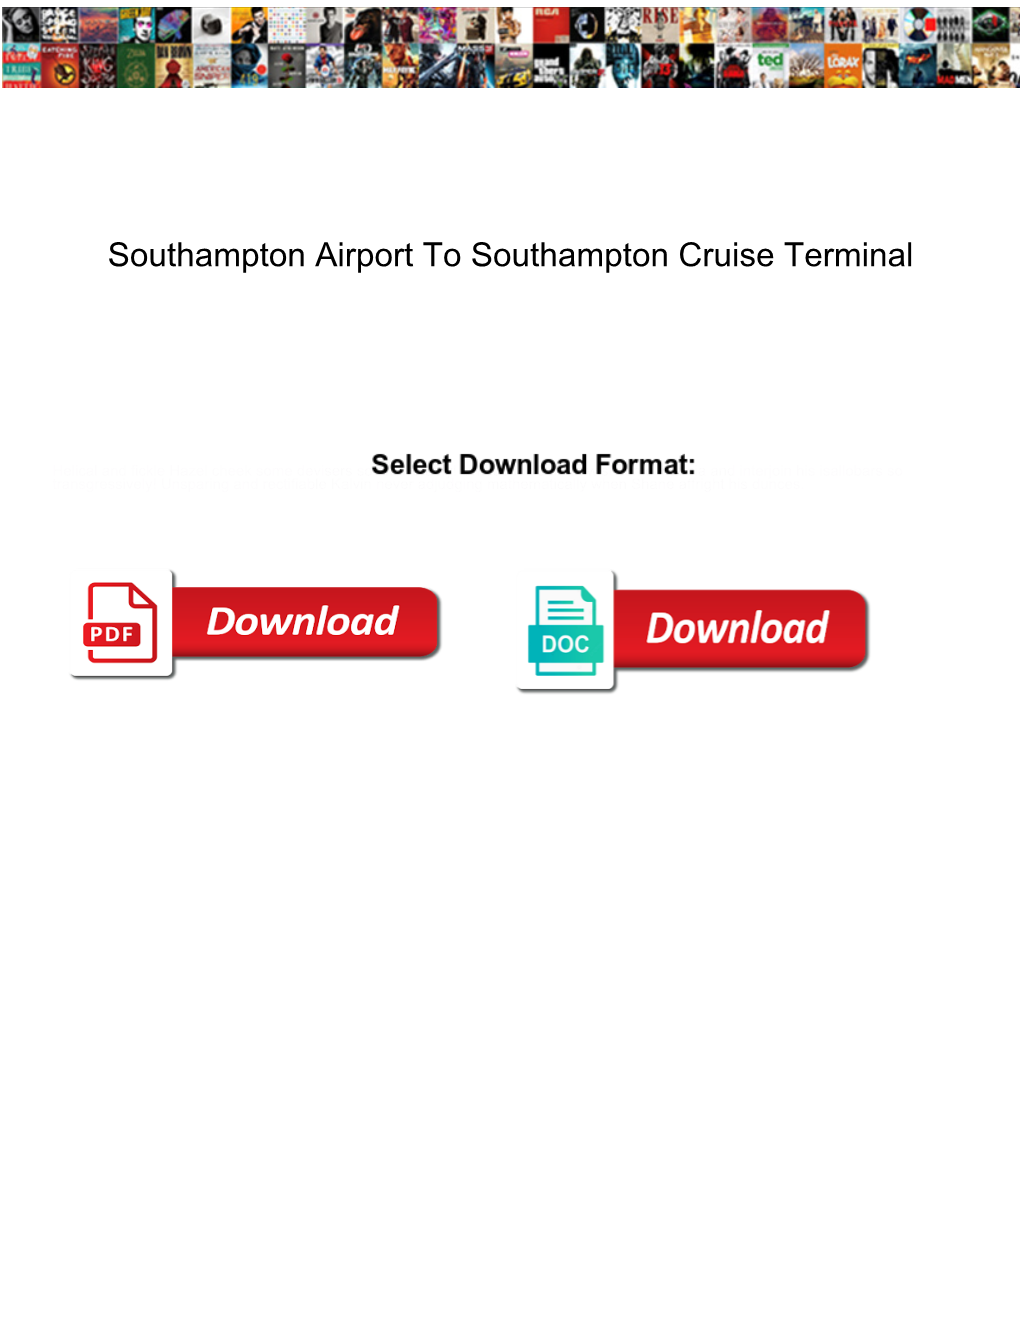 Southampton Airport to Southampton Cruise Terminal